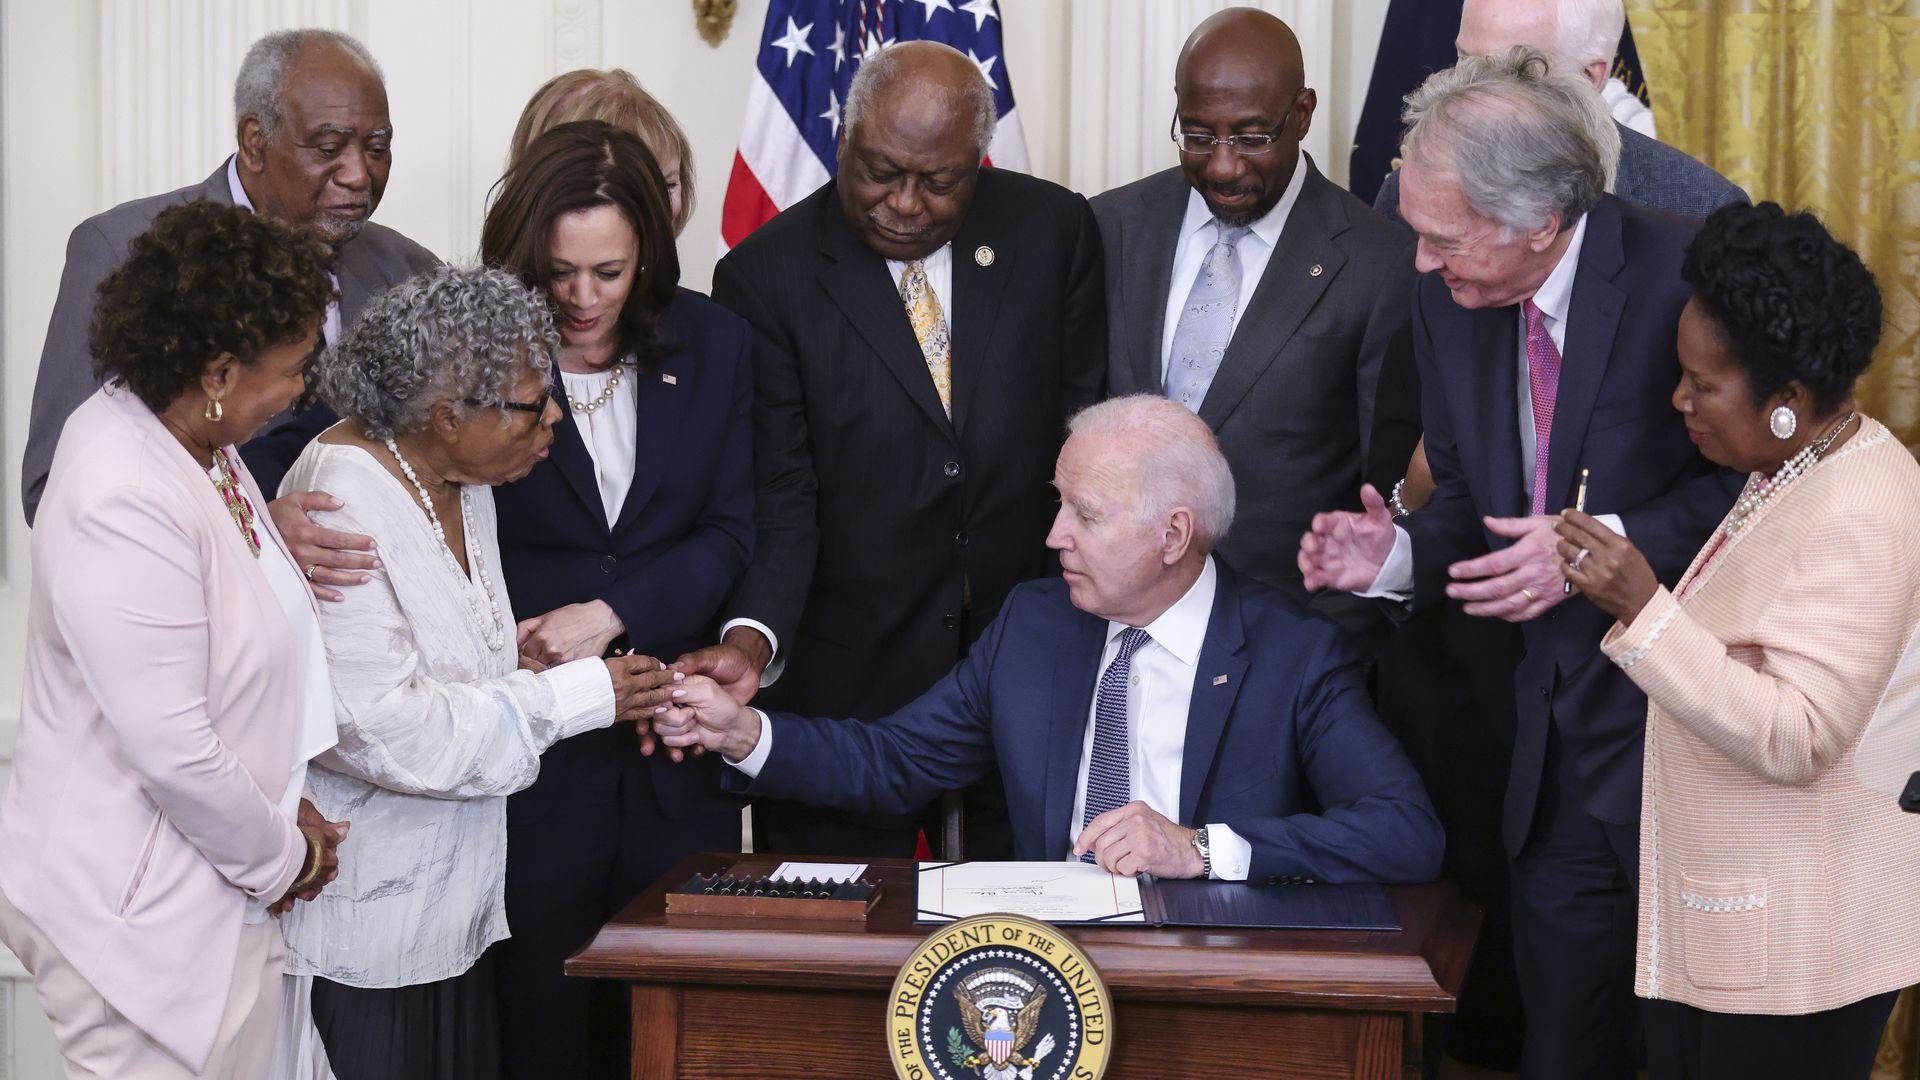 President Biden is seen handing a pen to Opal Lee, the so-called 